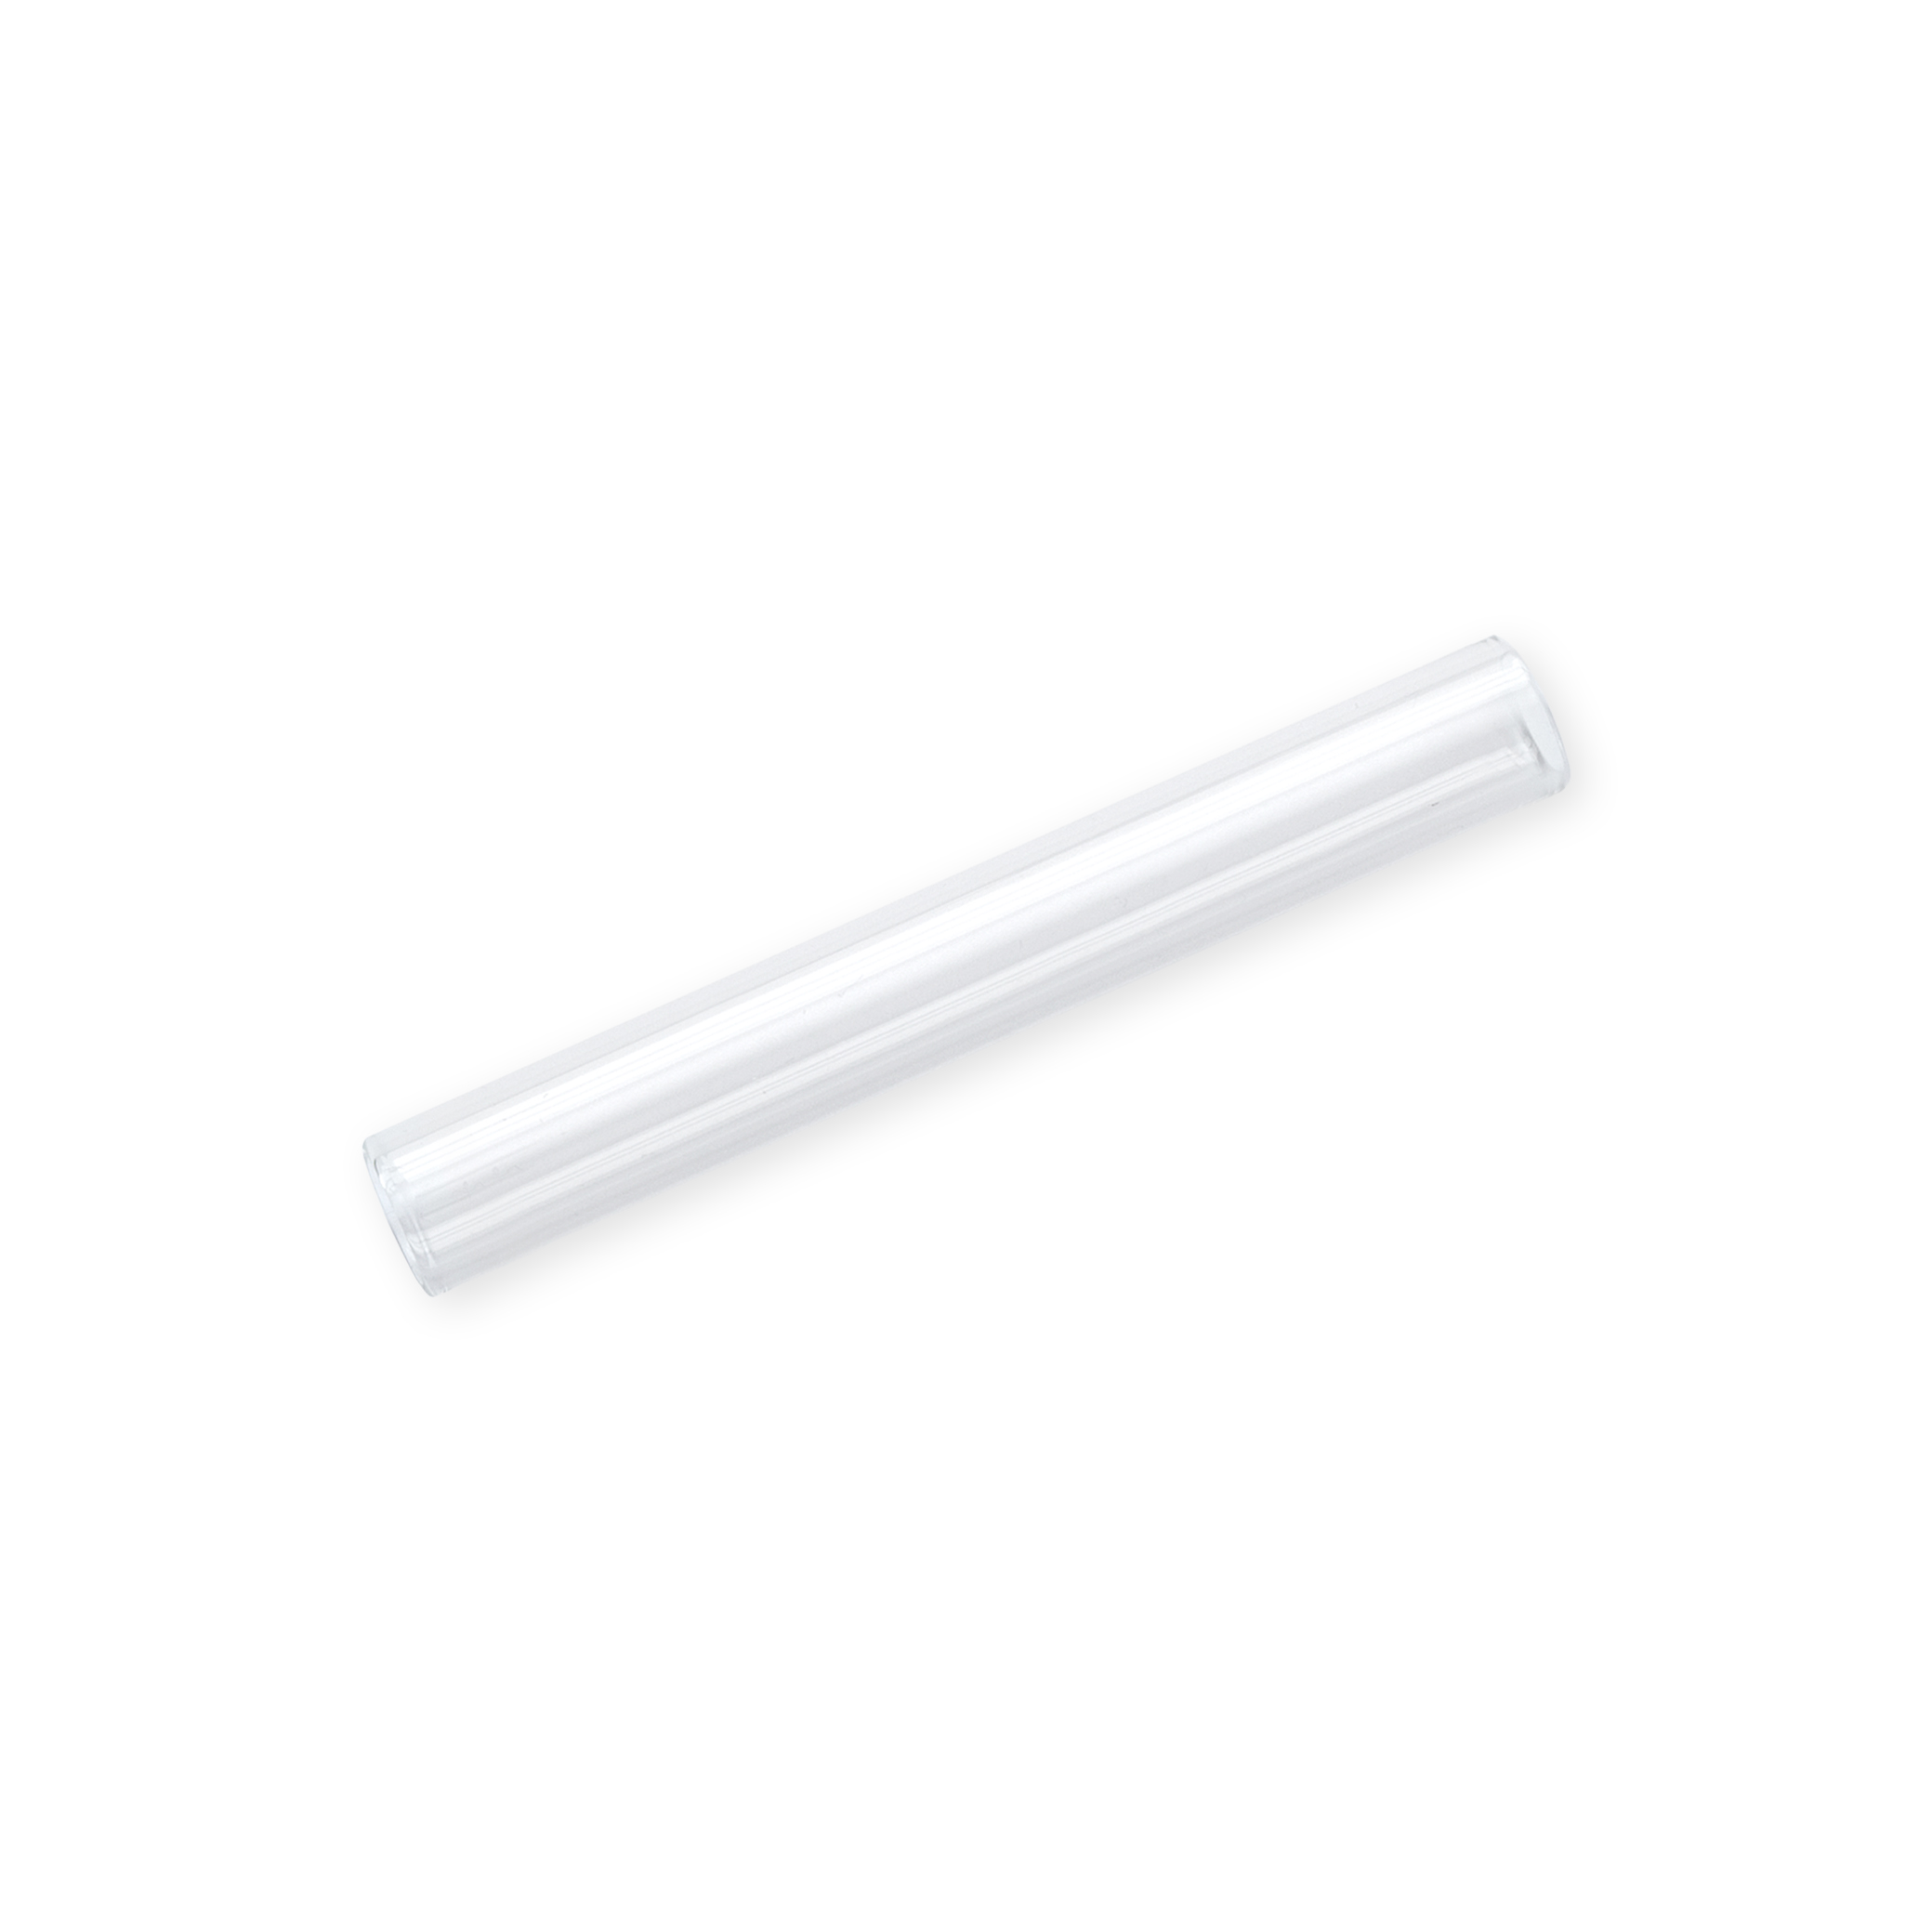 Terpan Long (11.5cm) Straight Glass Pipe